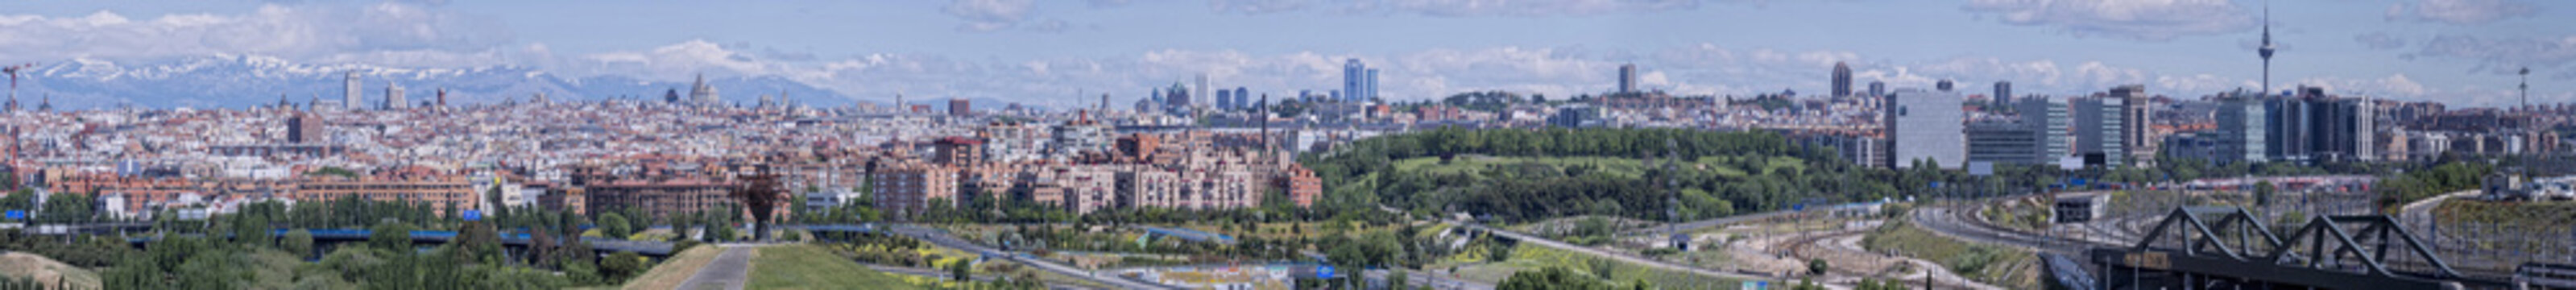 Panoramic view of Madrid. Spain